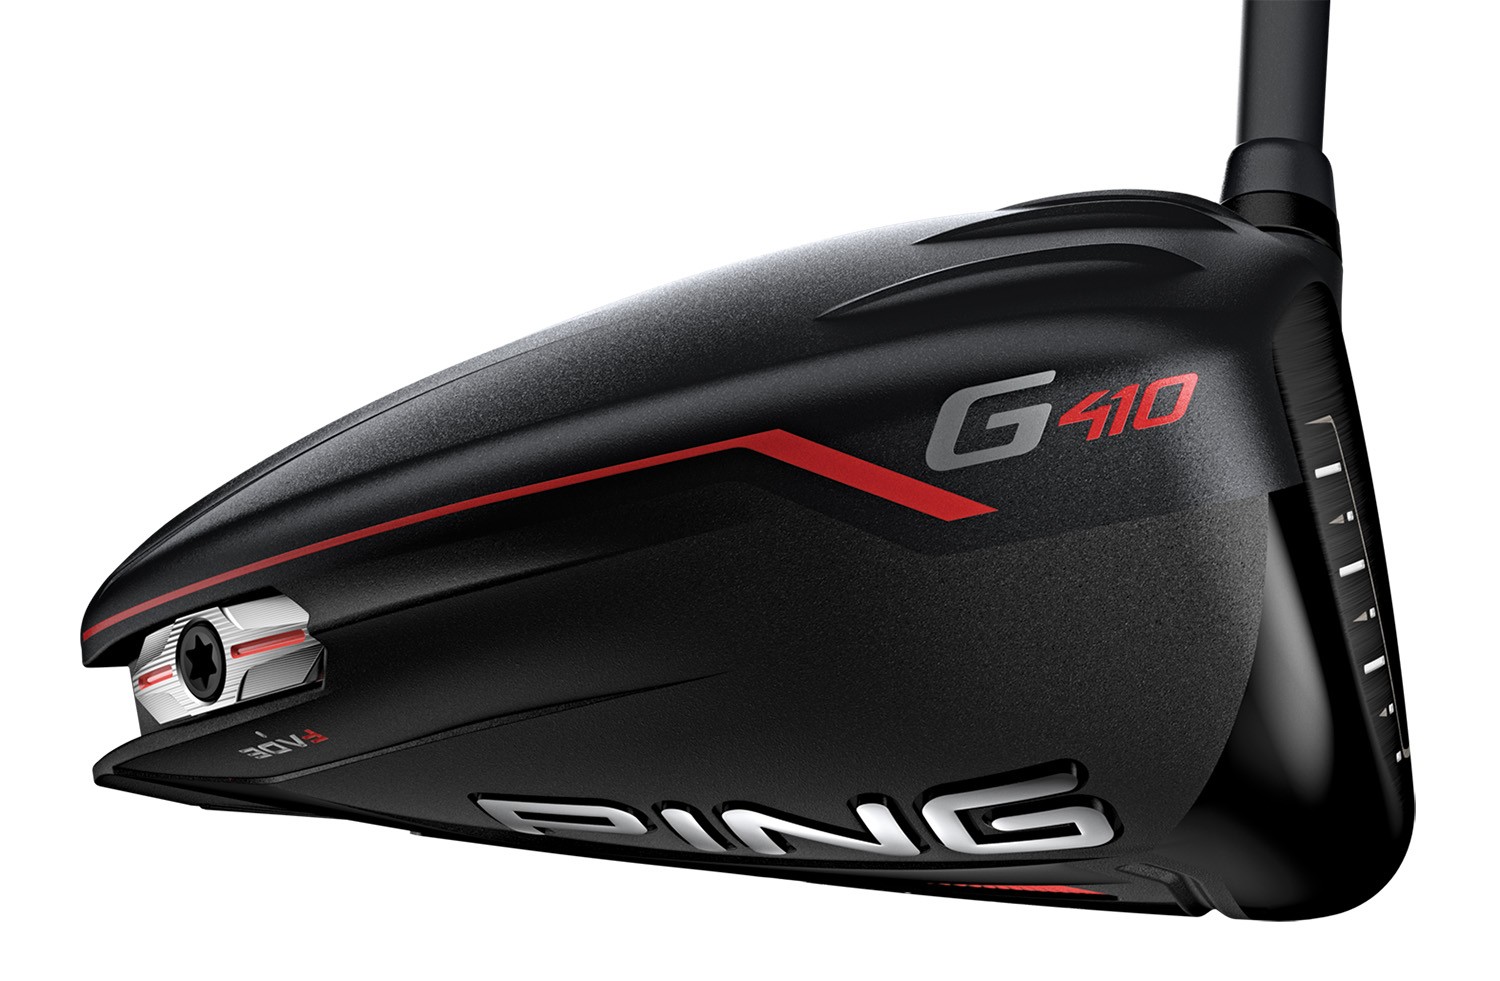 Test: Ping G410 Plus driver | Golfersmagazine